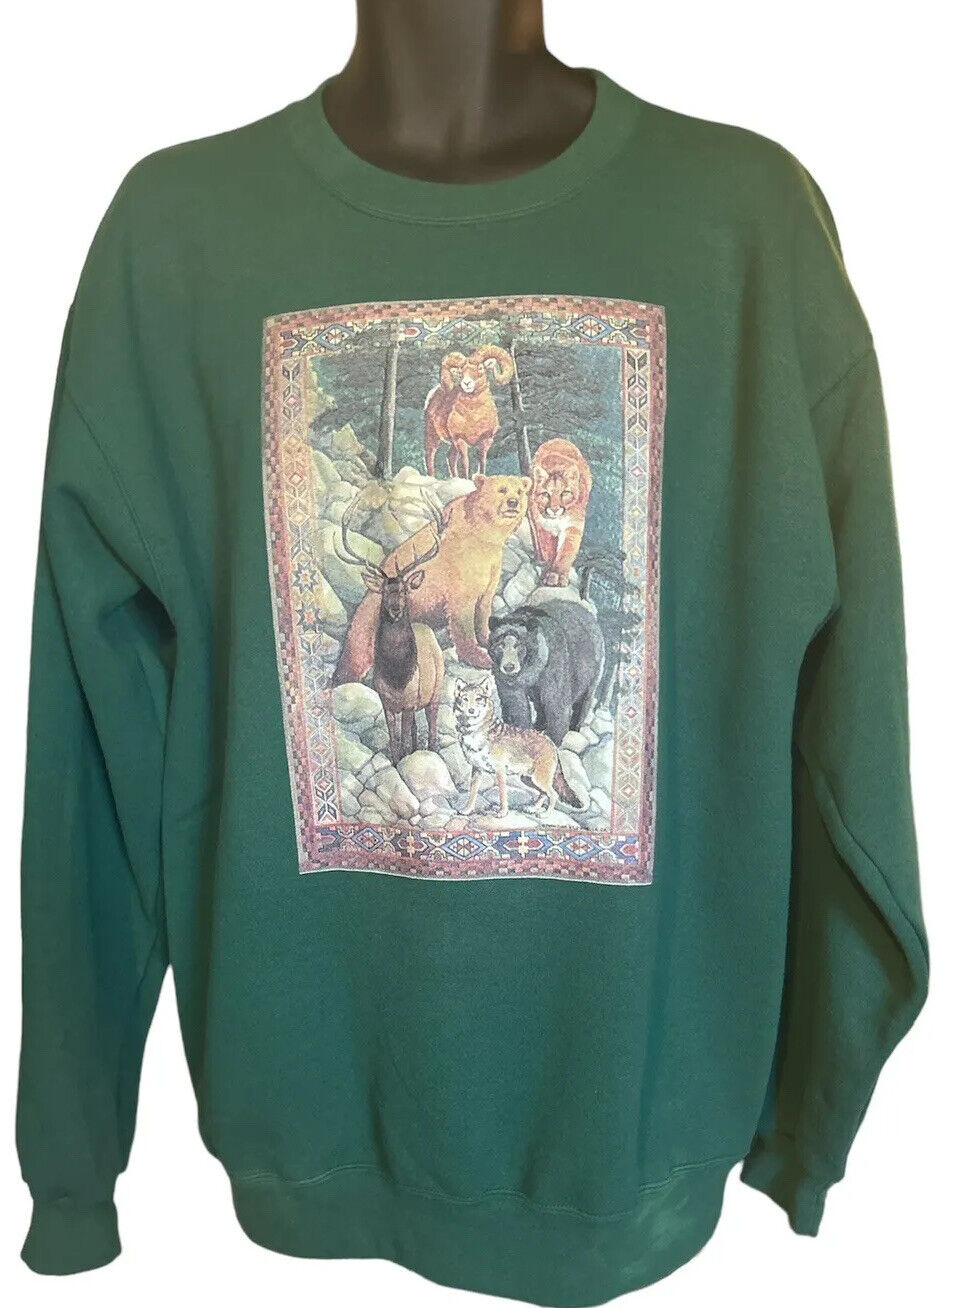 Vintage Walt Disney World Sweatshirt Embroidered Adult Sz Med Made in USA